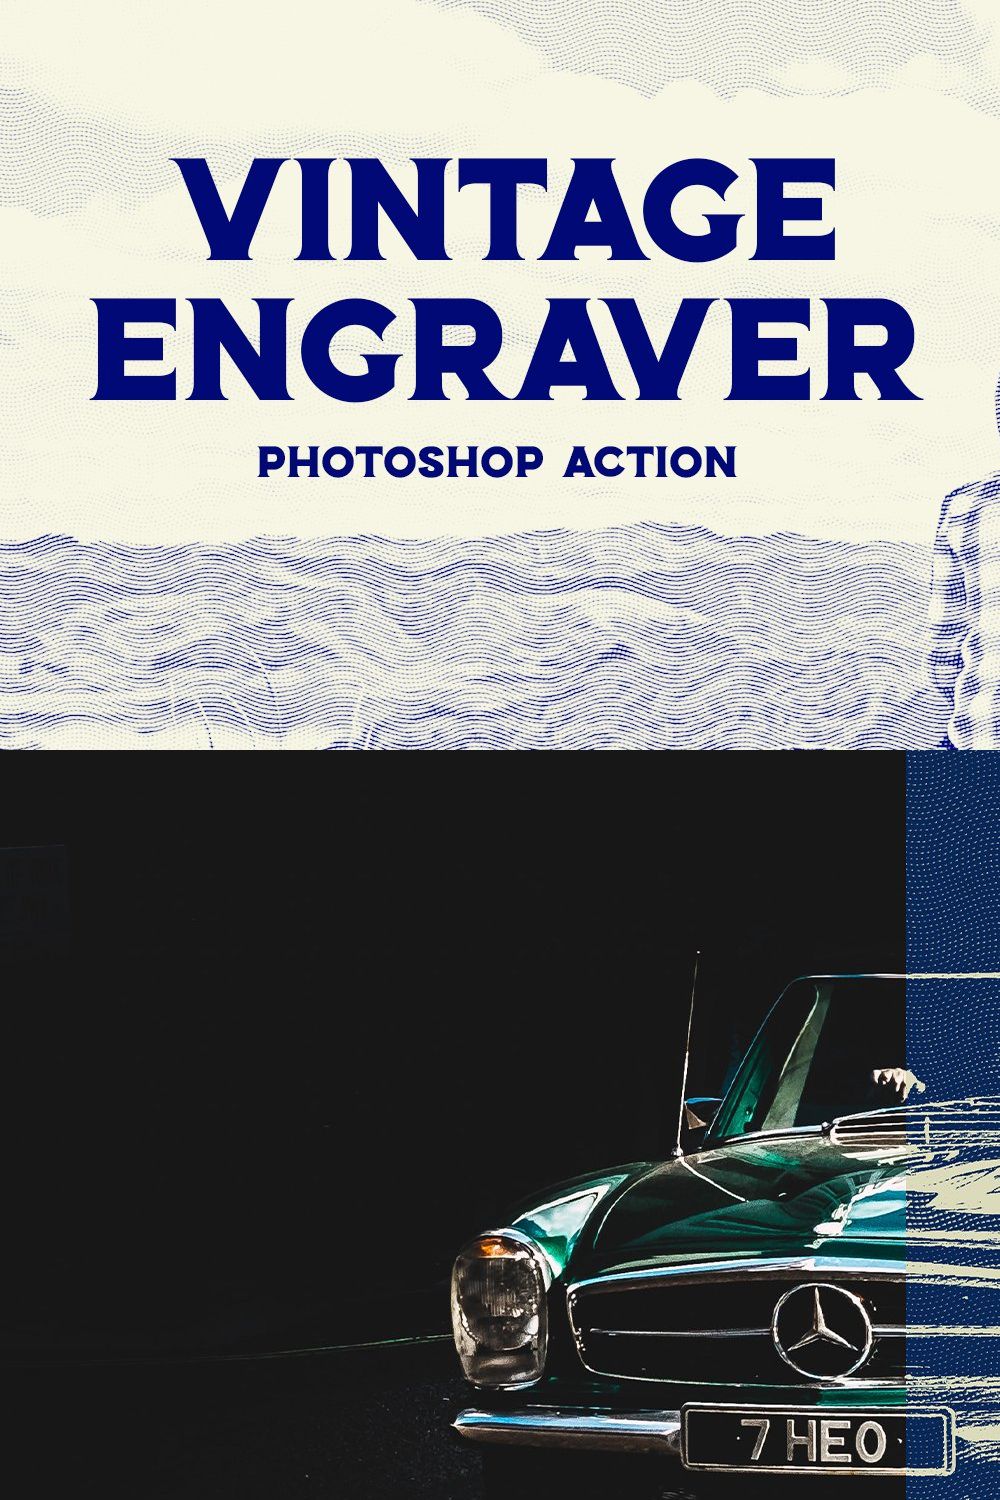 Vintage Engraver - Photoshop Action pinterest preview image.